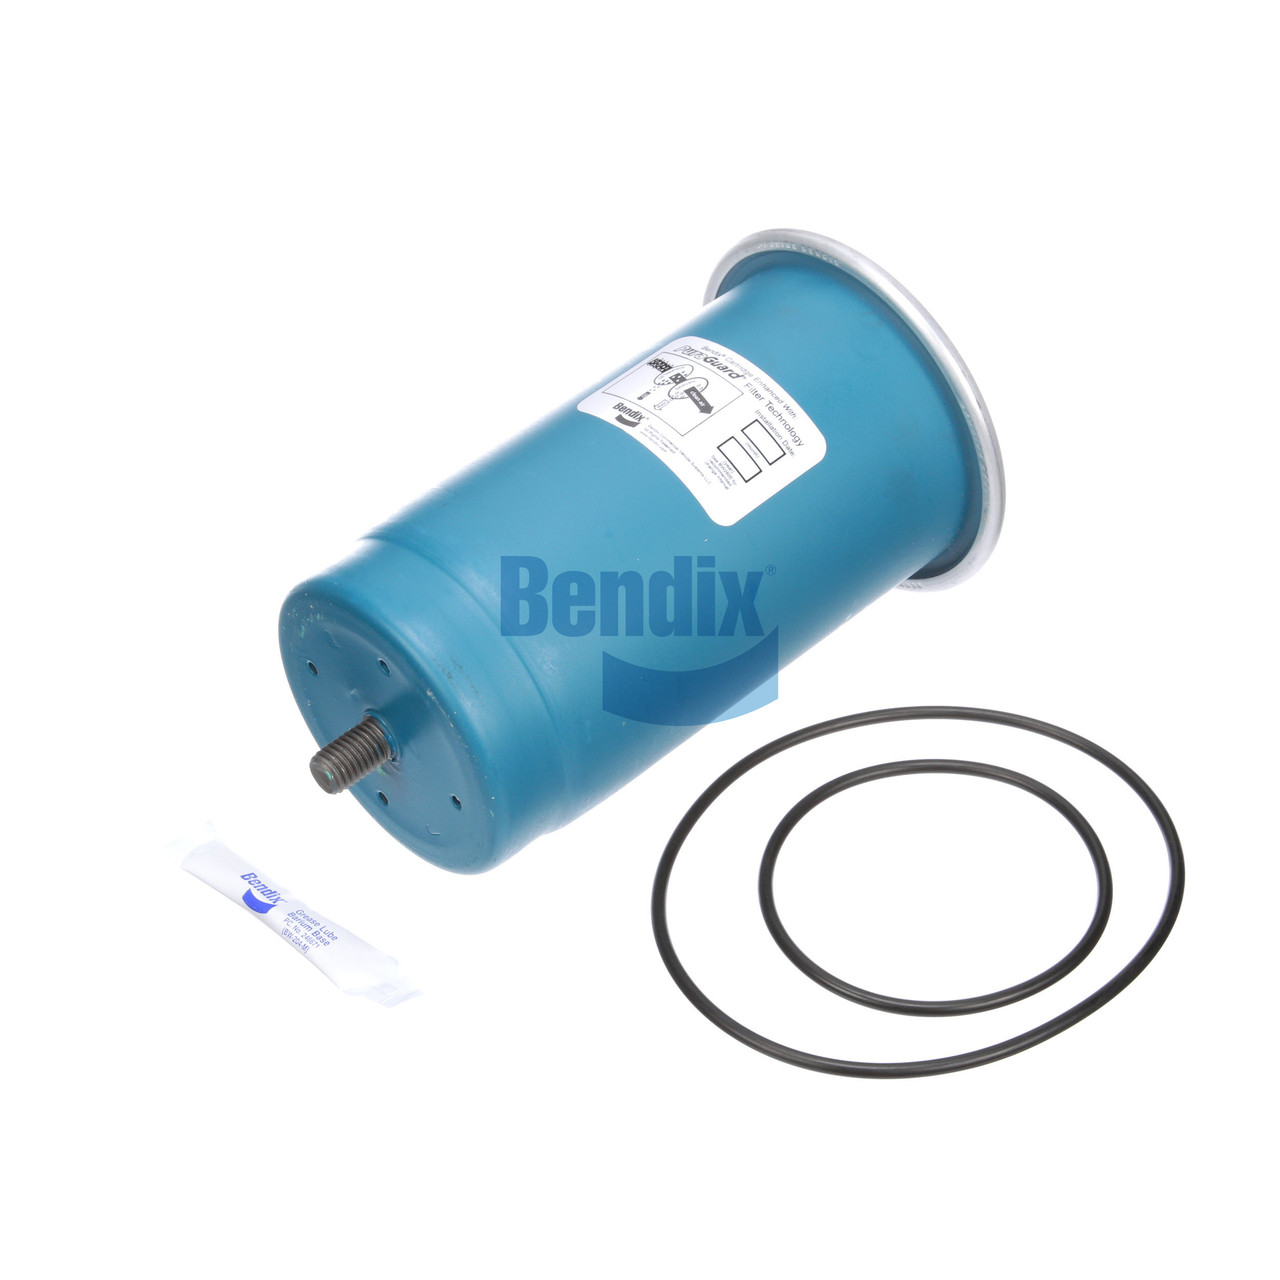 Bendix AD-9 Air Dryer Coalescing Cartridge , Reman  *Genuine Bendix* 107794PG - replaces 107796PG